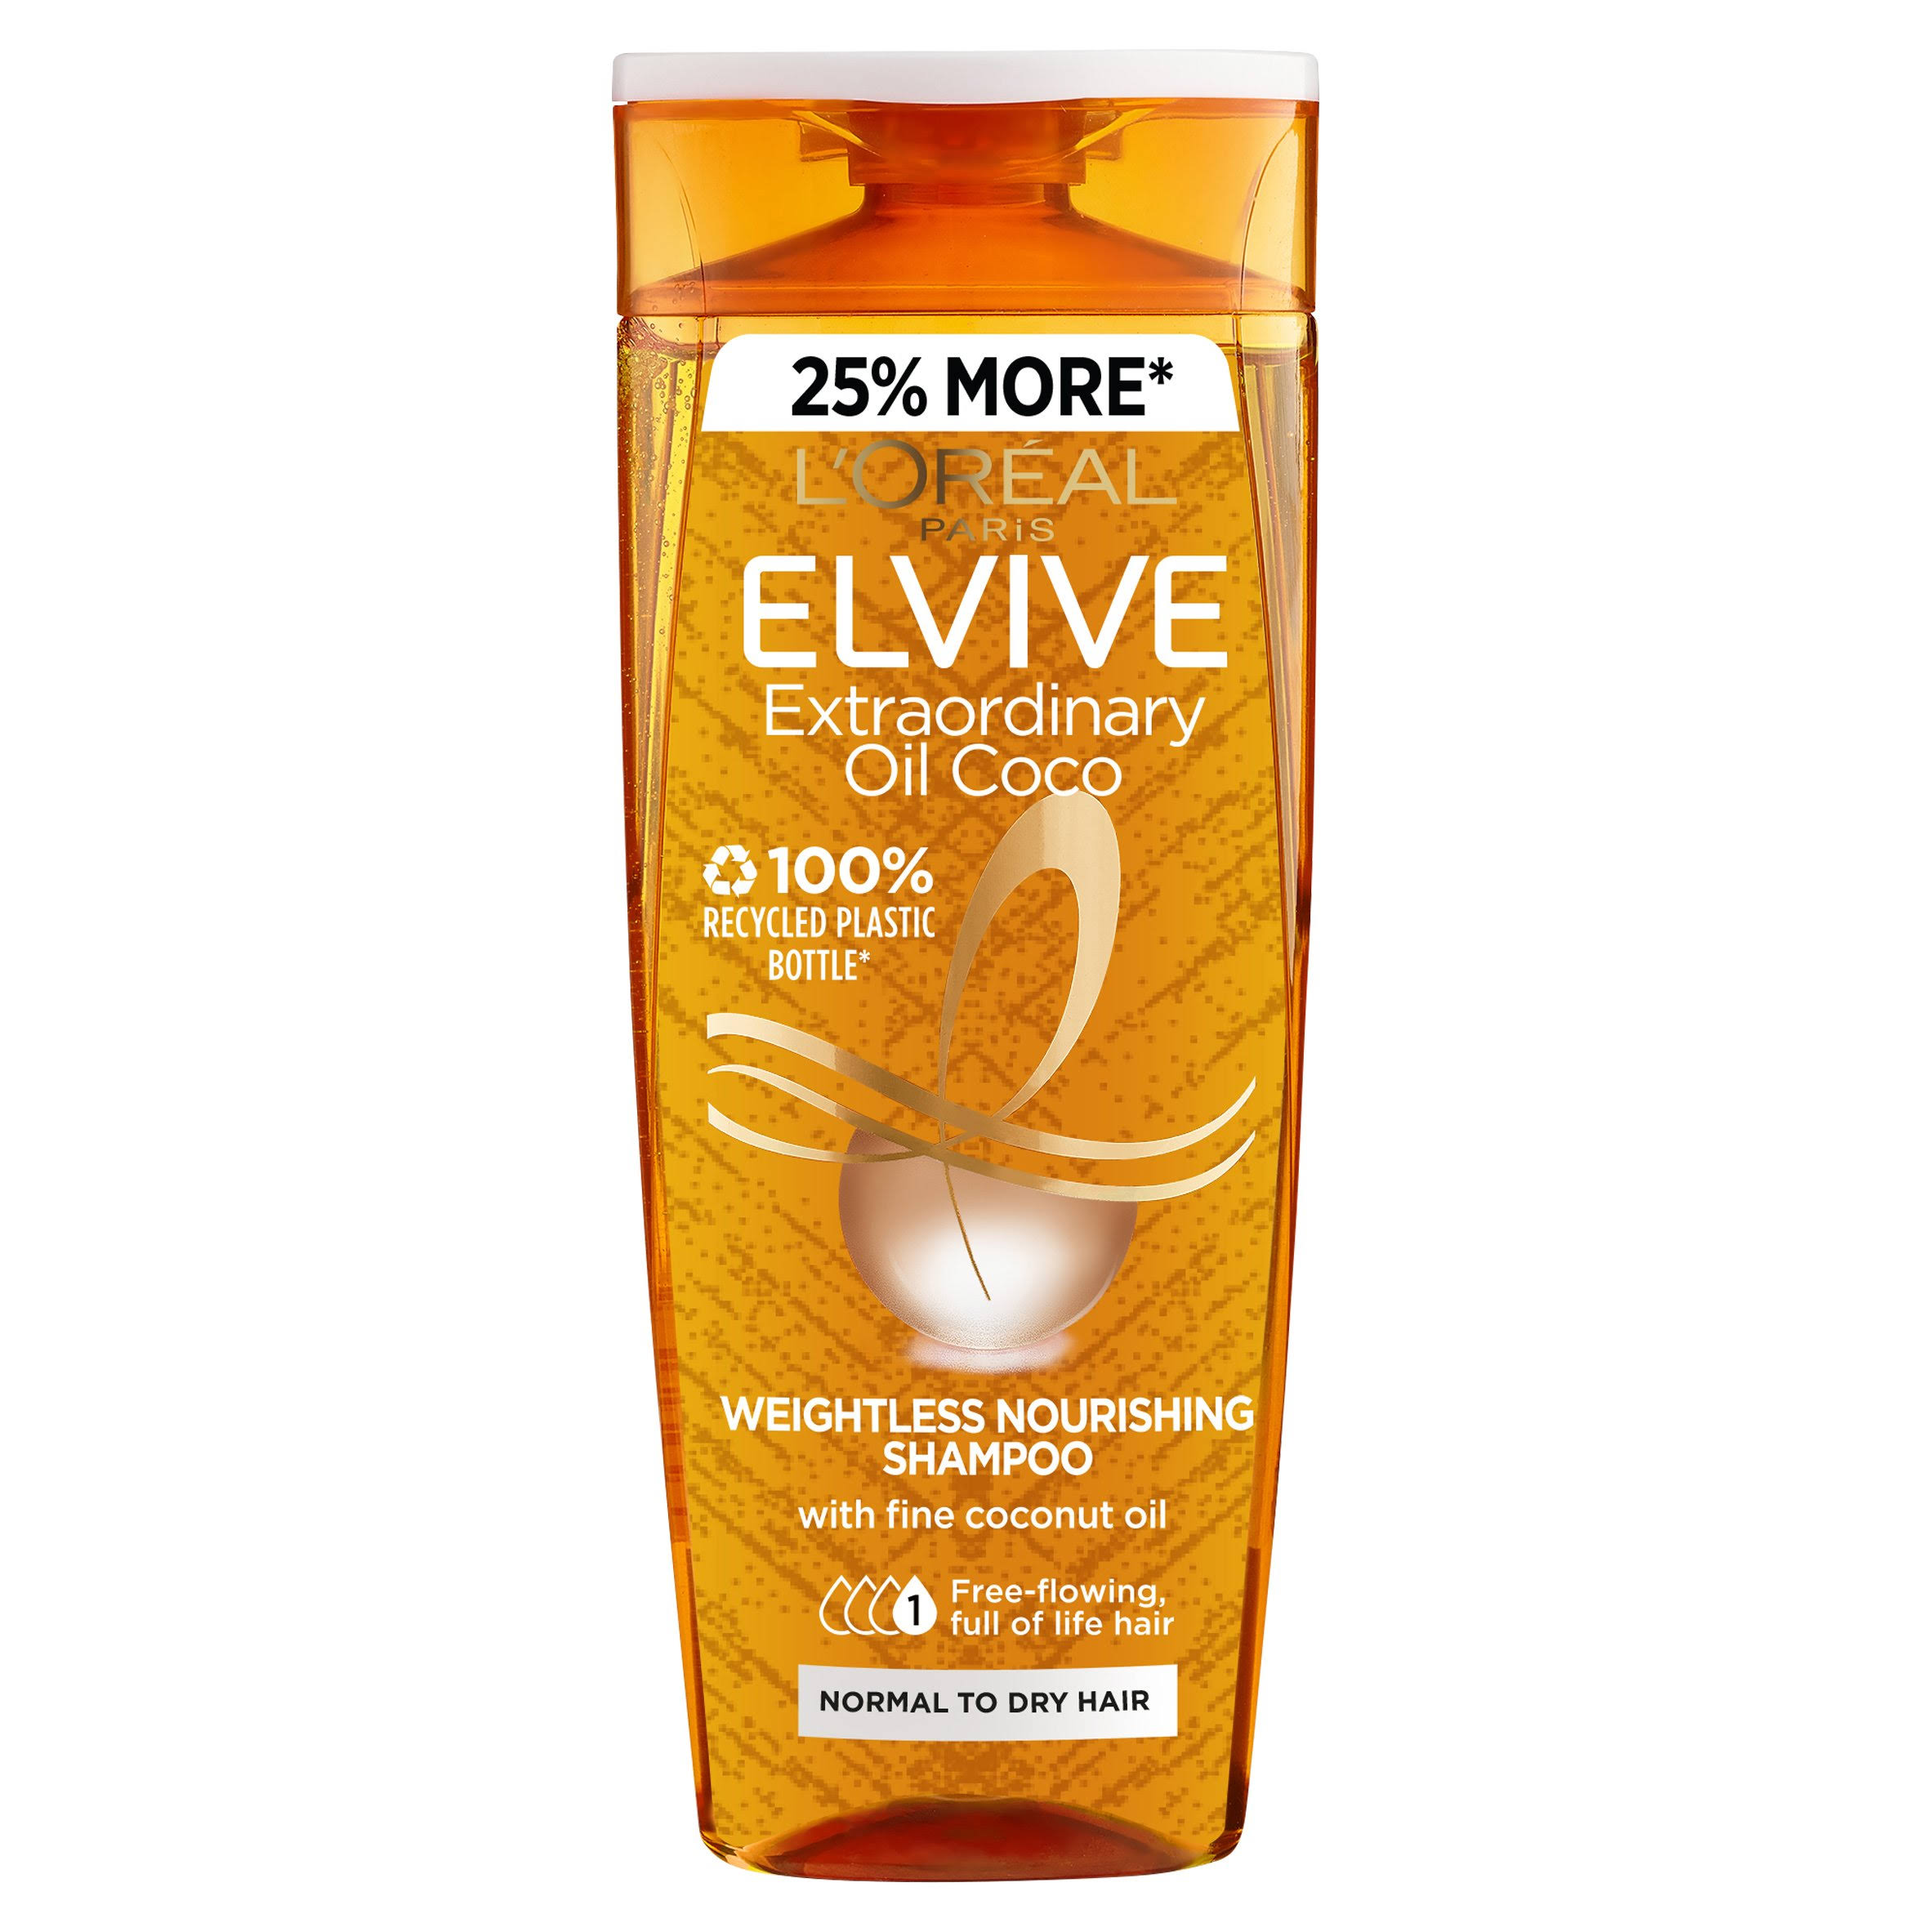 L'Oreal Elvive Extraordinary Coconut Oil Shampoo 500ml